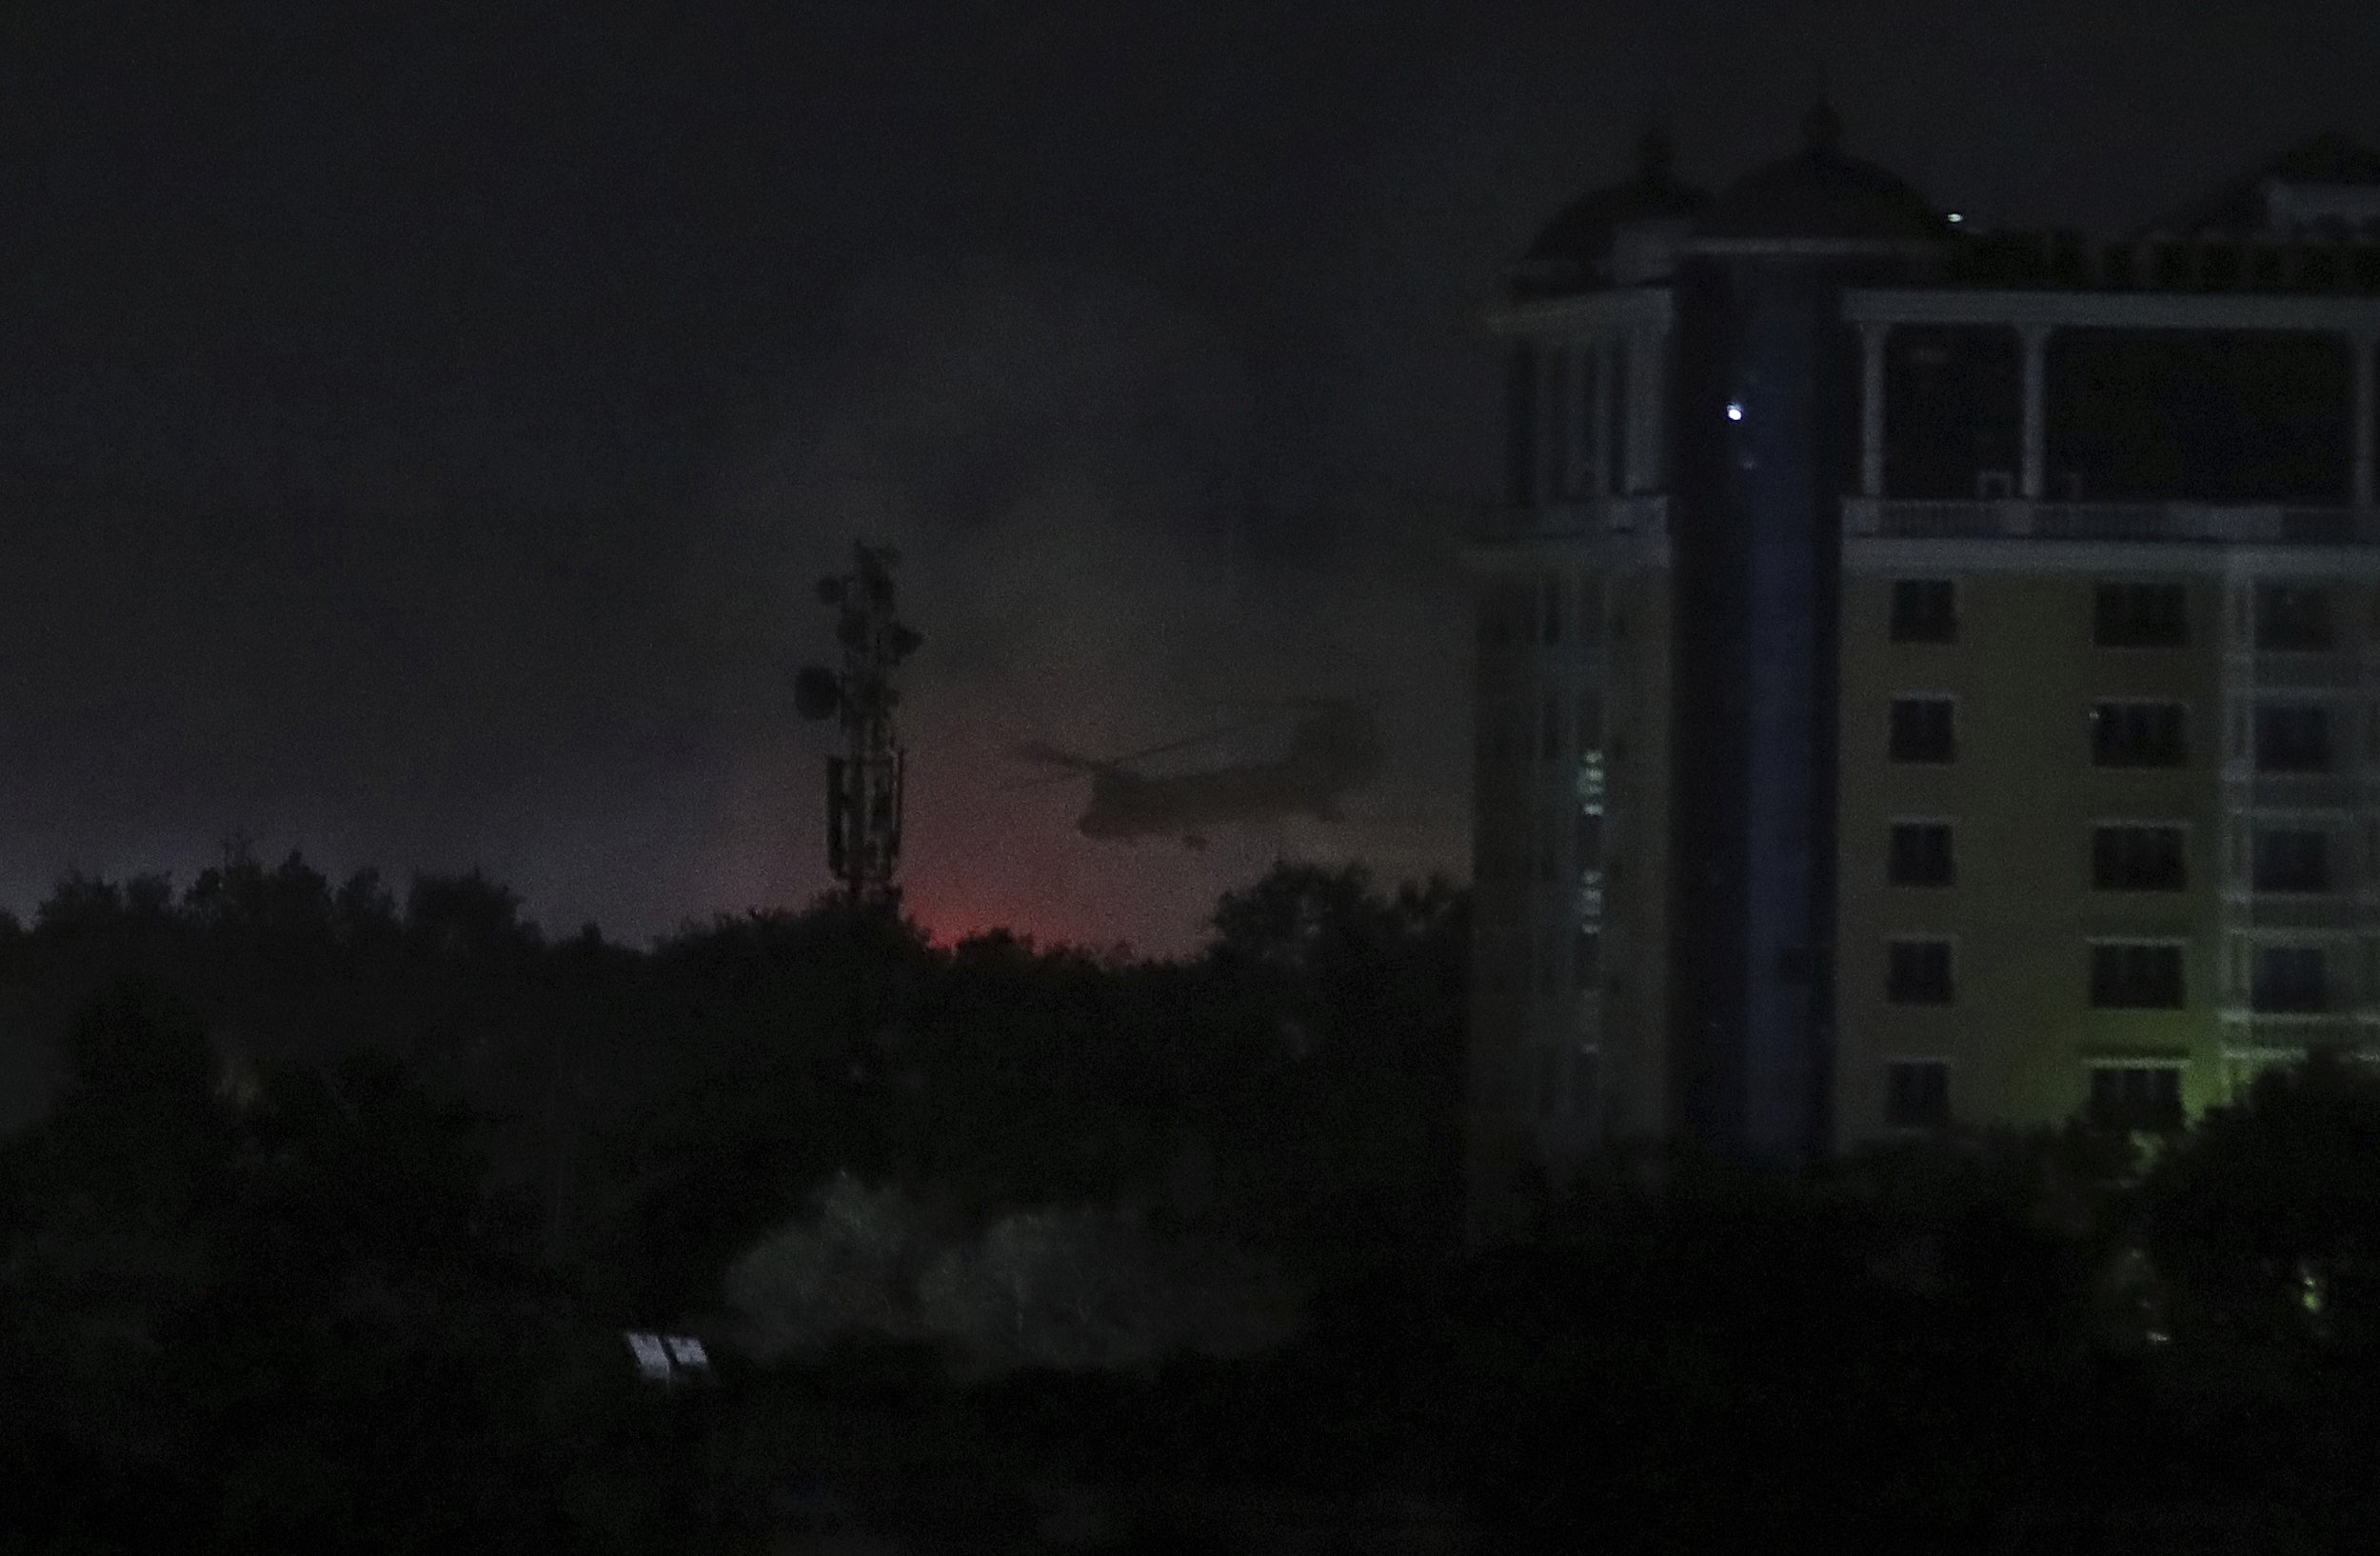  A U.S. Chinook helicopter flies near the U.S. Embassy as smoke rises in Kabul, Afghanistan, late Sunday, Aug. 15, 2021. (AP Photo/Rahmat Gul) 